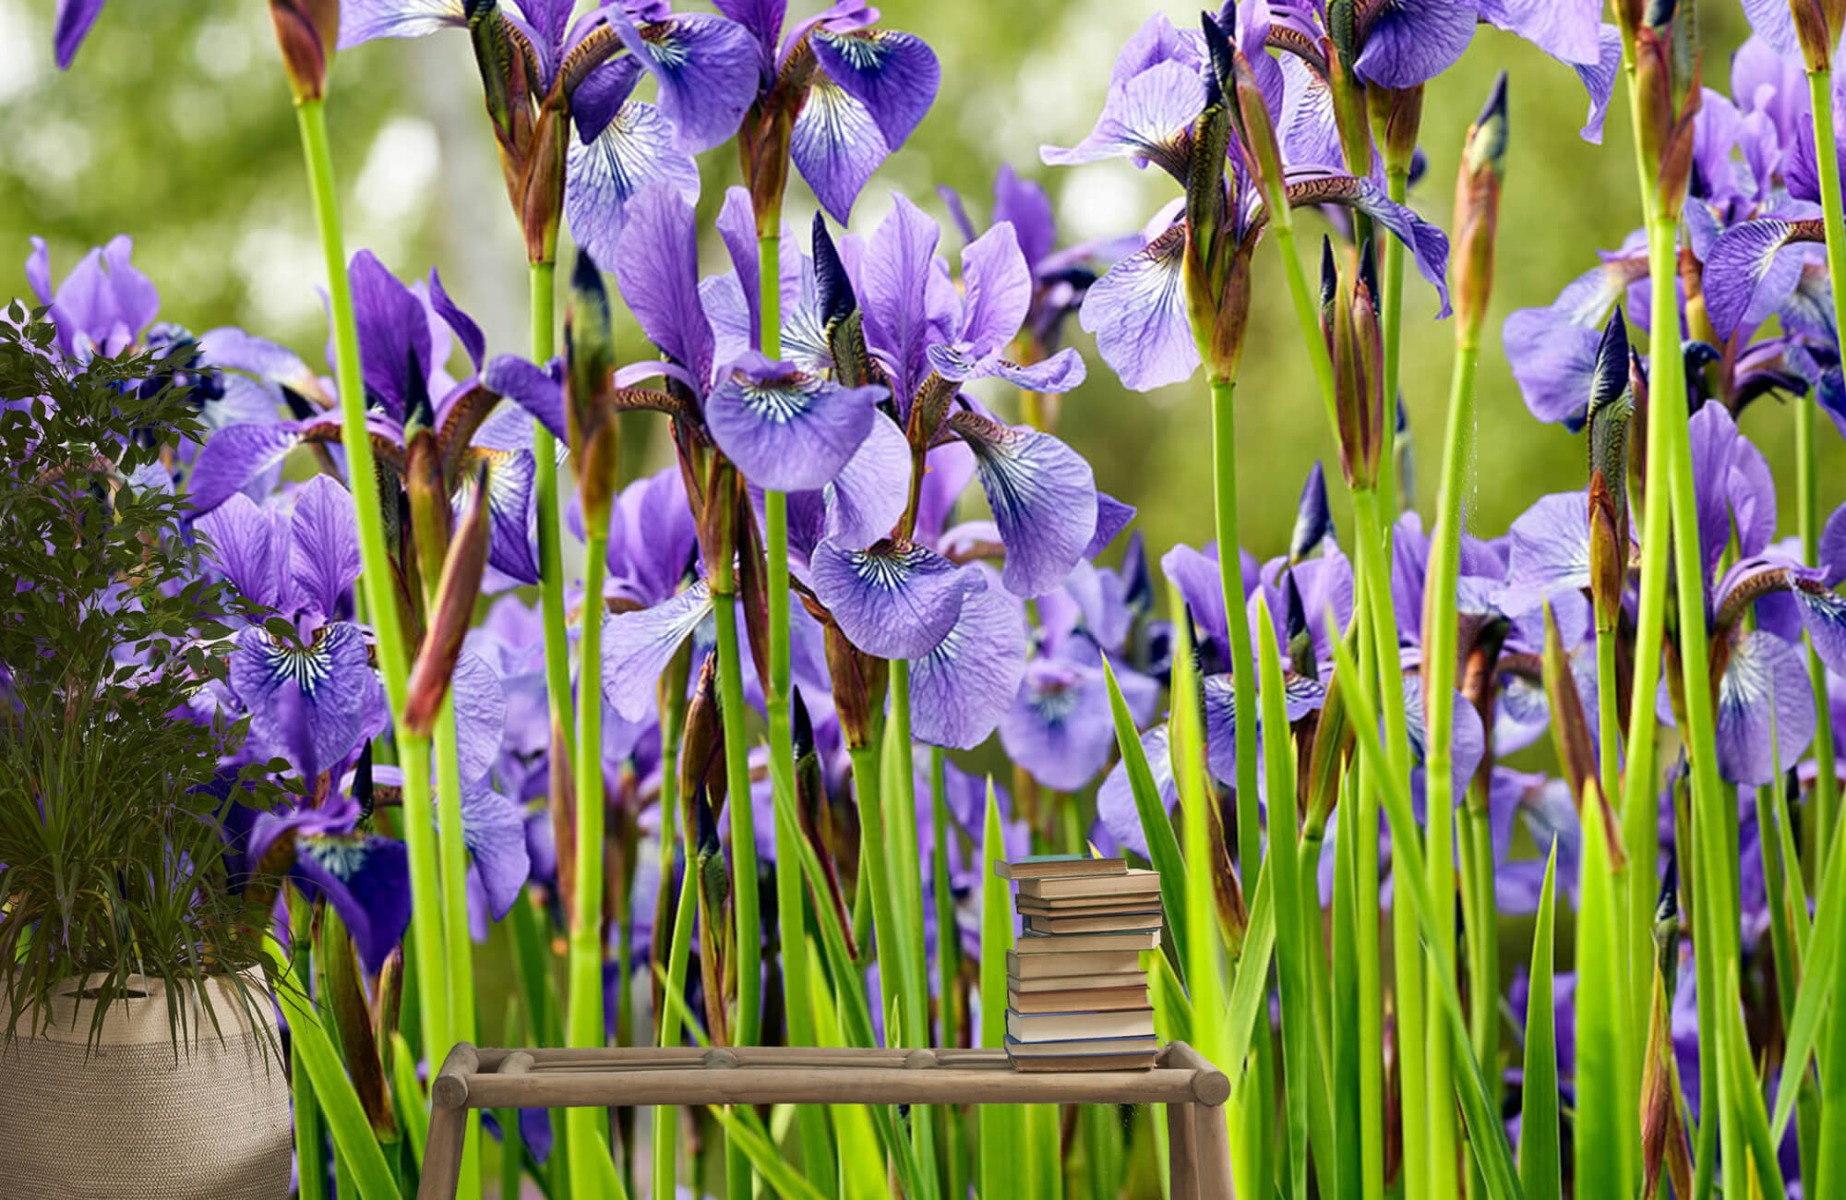 Flower fields - Irises  - Bedroom 20